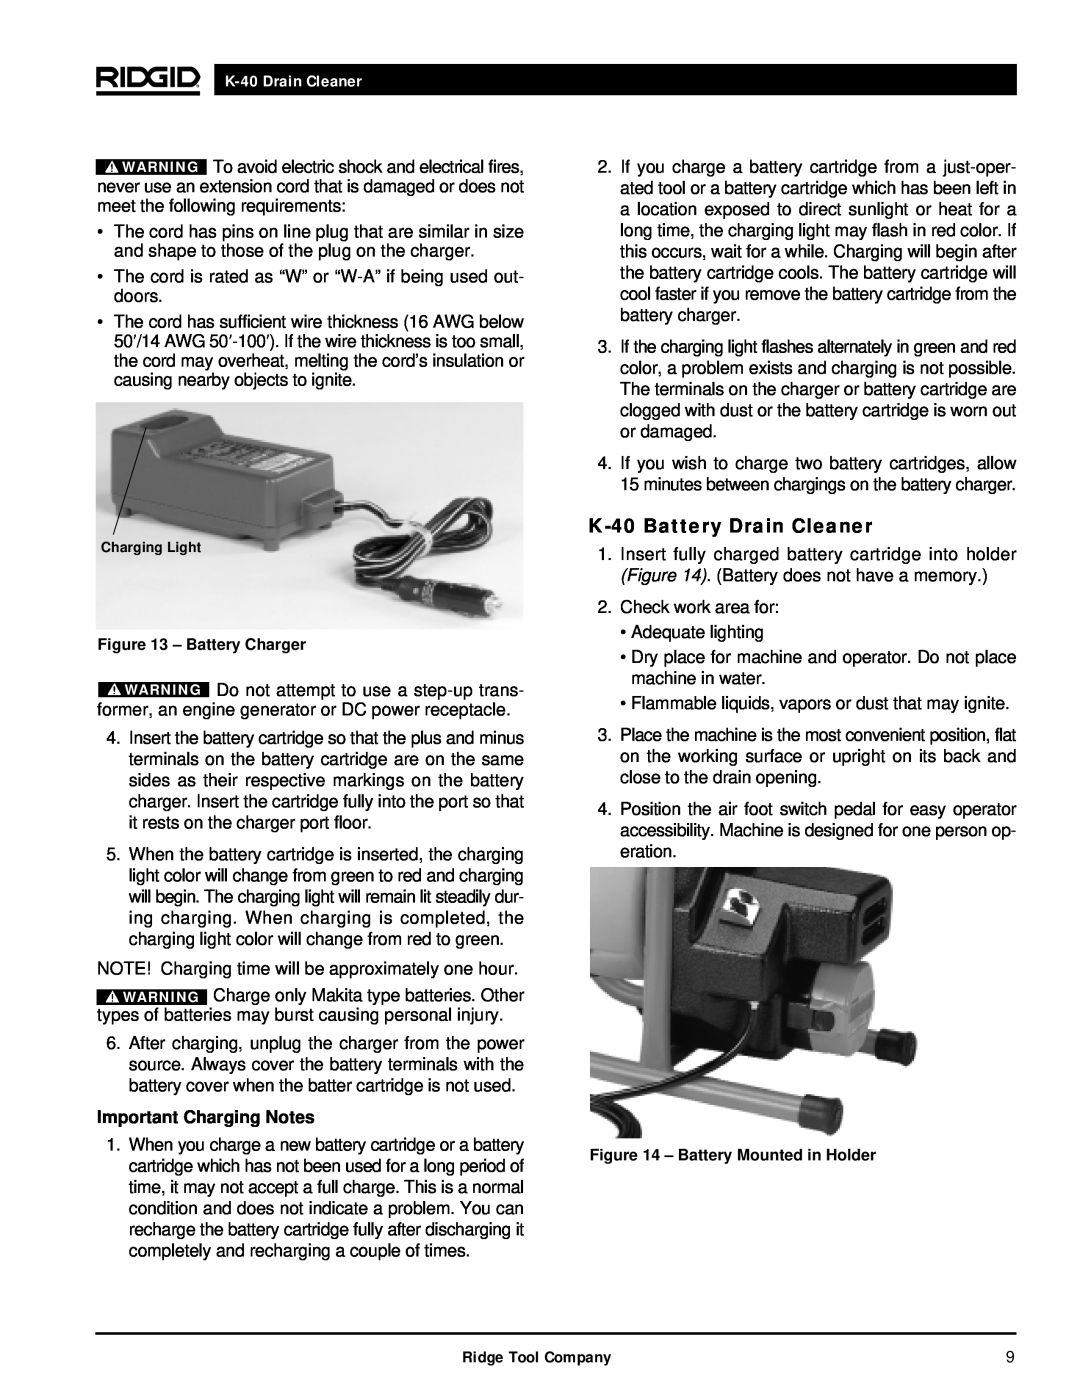 RIDGID K-40G PF manual K-40Battery Drain Cleaner, K-40Drain Cleaner, Important Charging Notes, Ridge Tool Company 